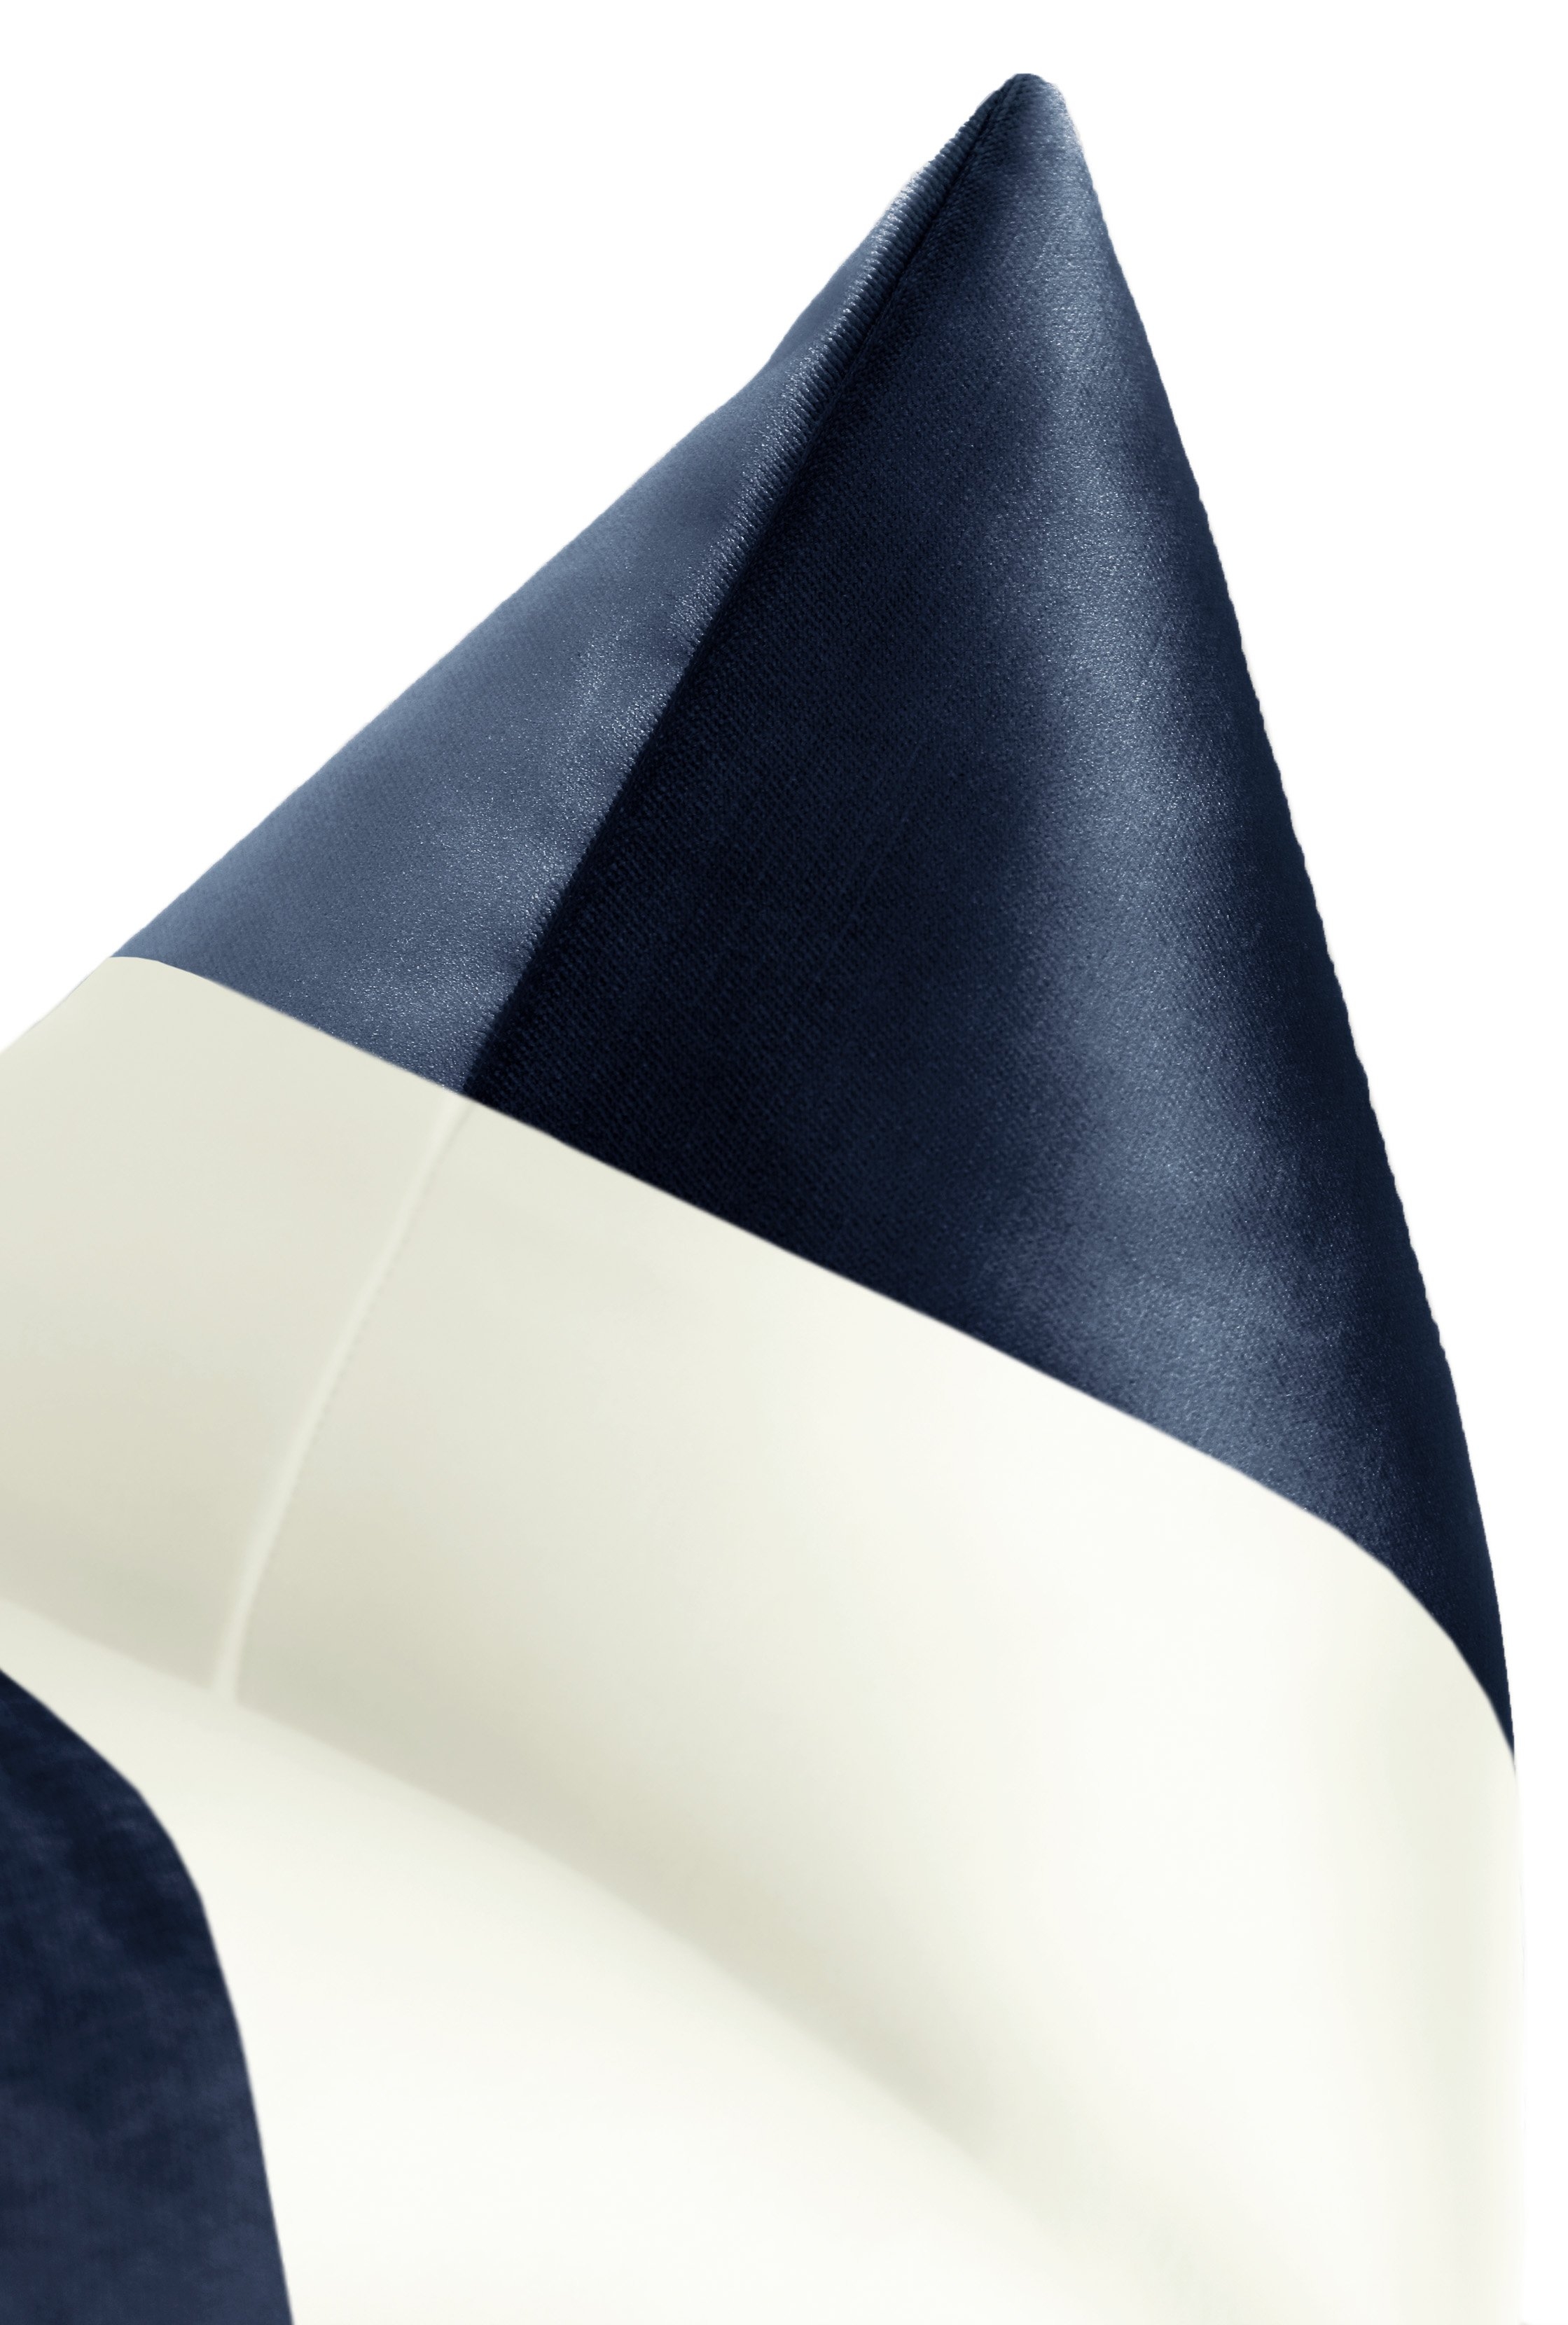 PANEL COLORBLOCK :: FAUX SILK VELVET // NAVY BLUE + ALABASTER SILK - 20" X 20" - Image 1